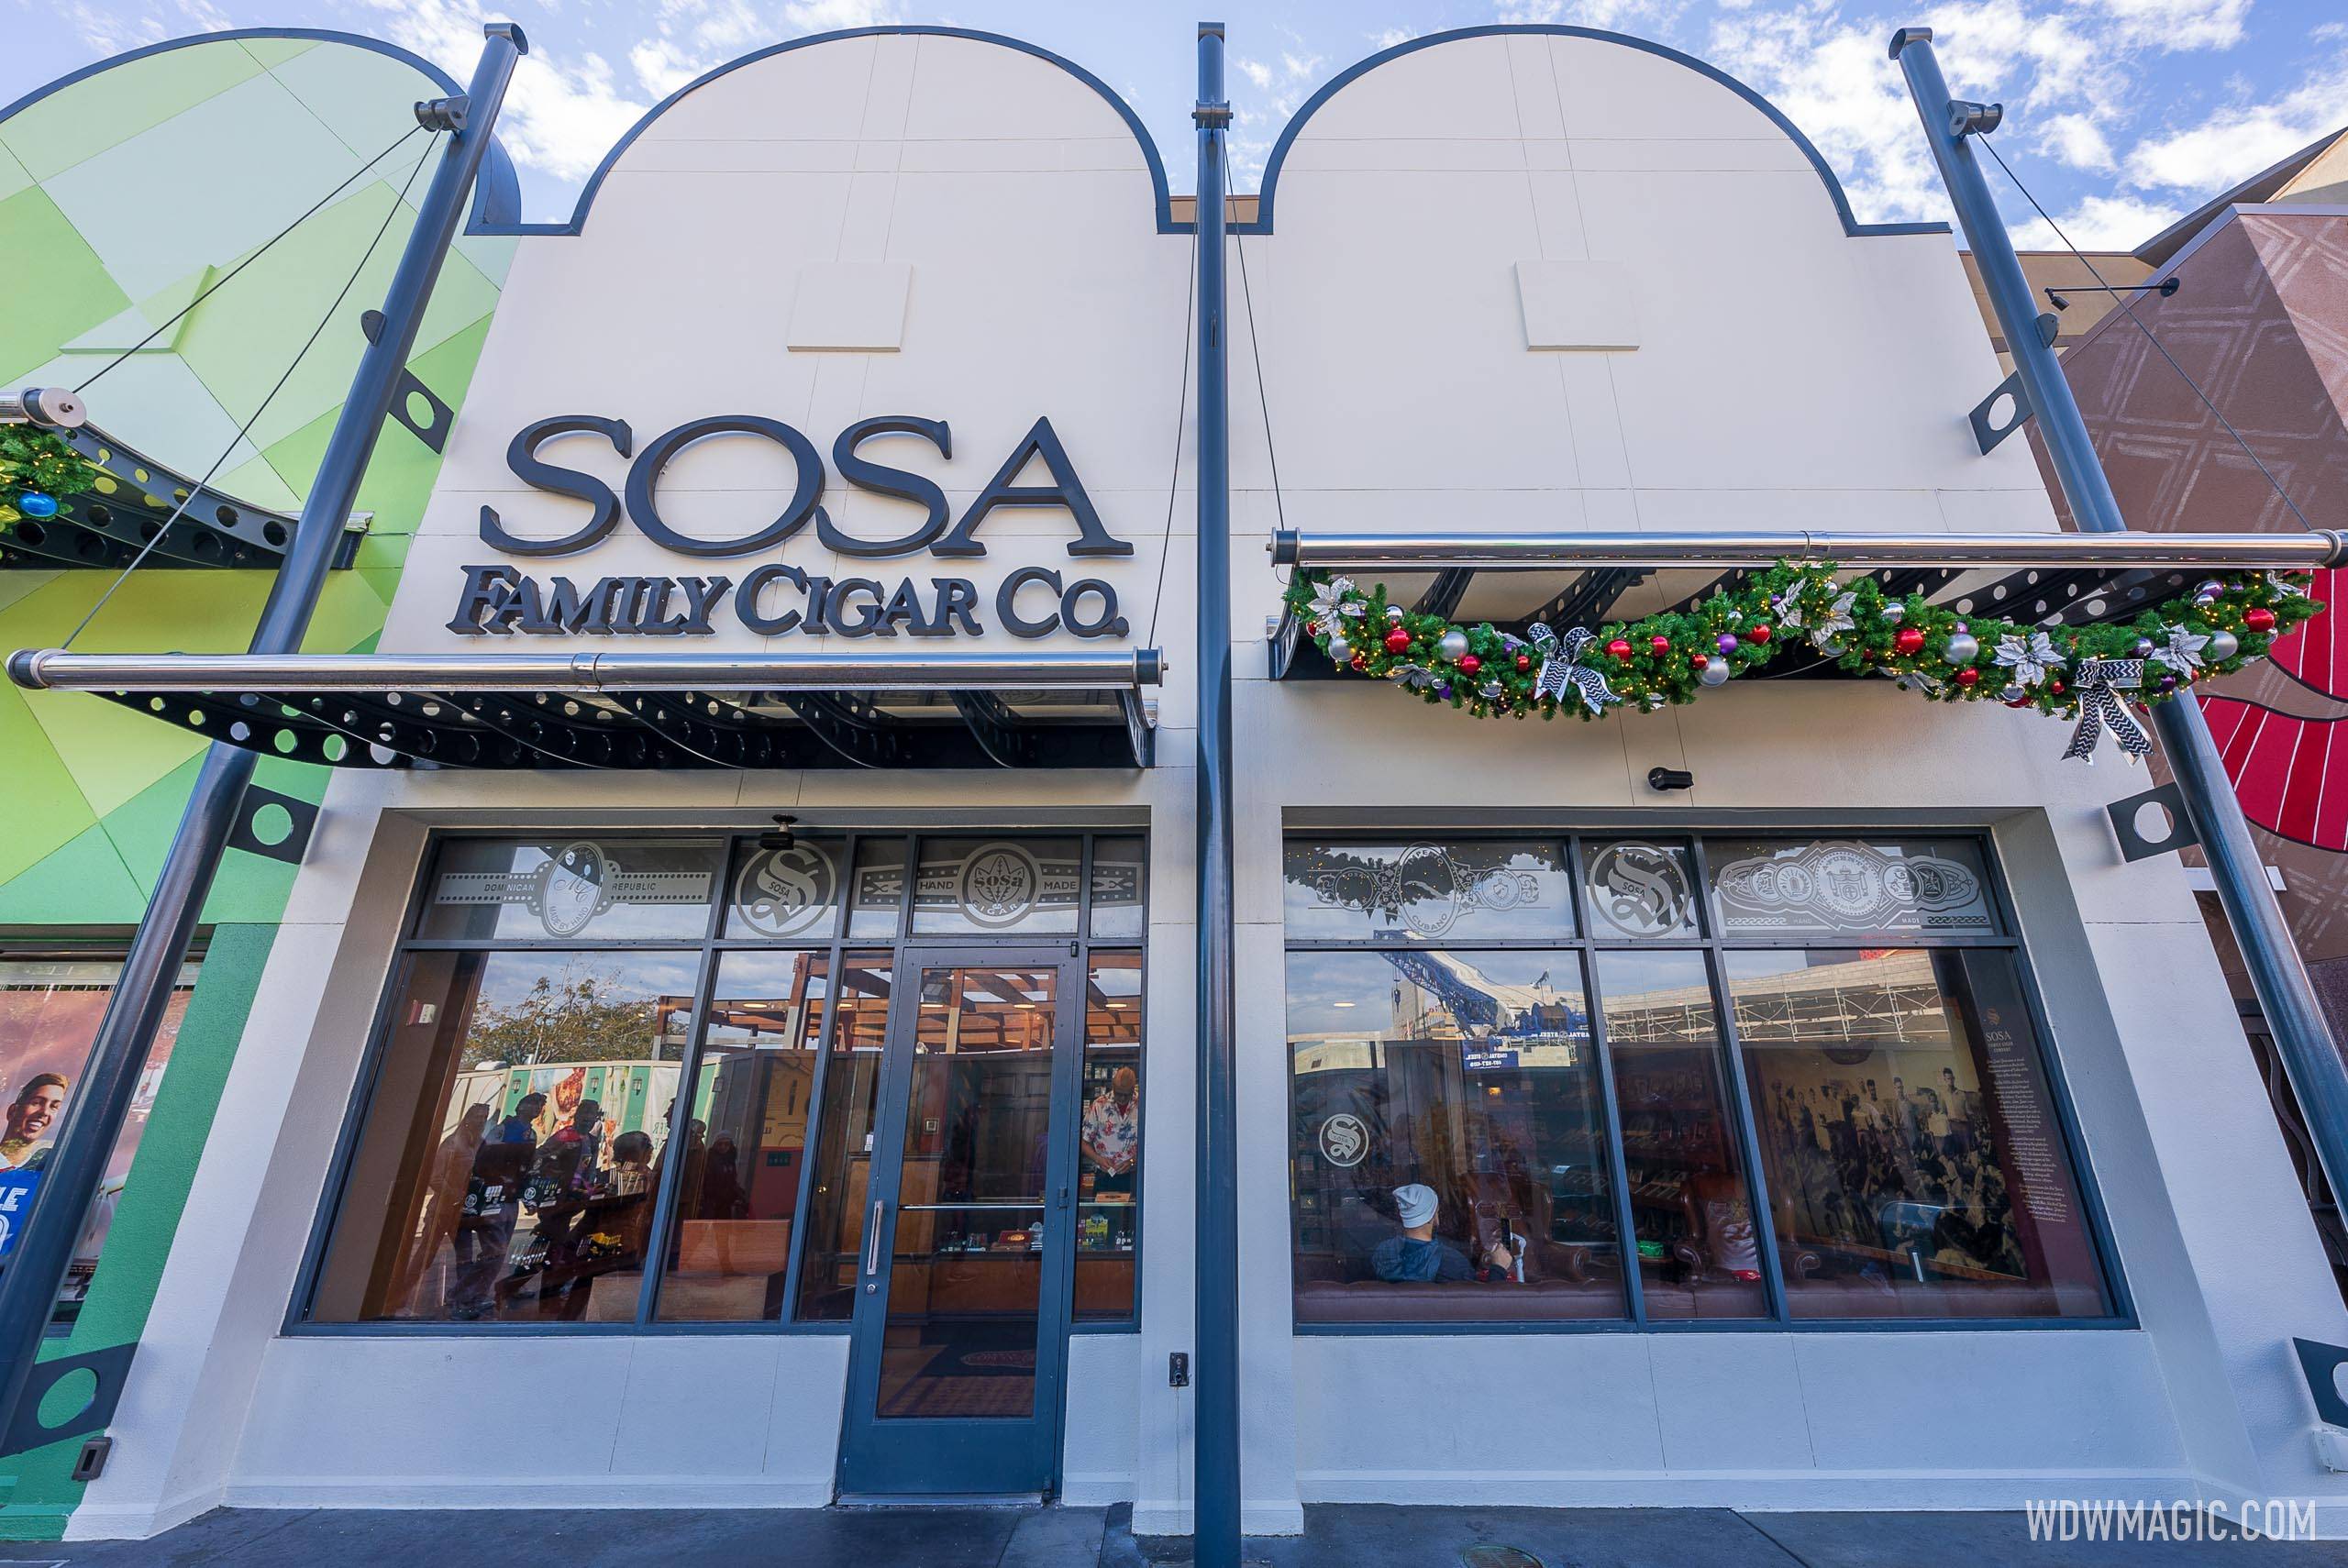 Sosa Family Cigar Co. overview - December 2022